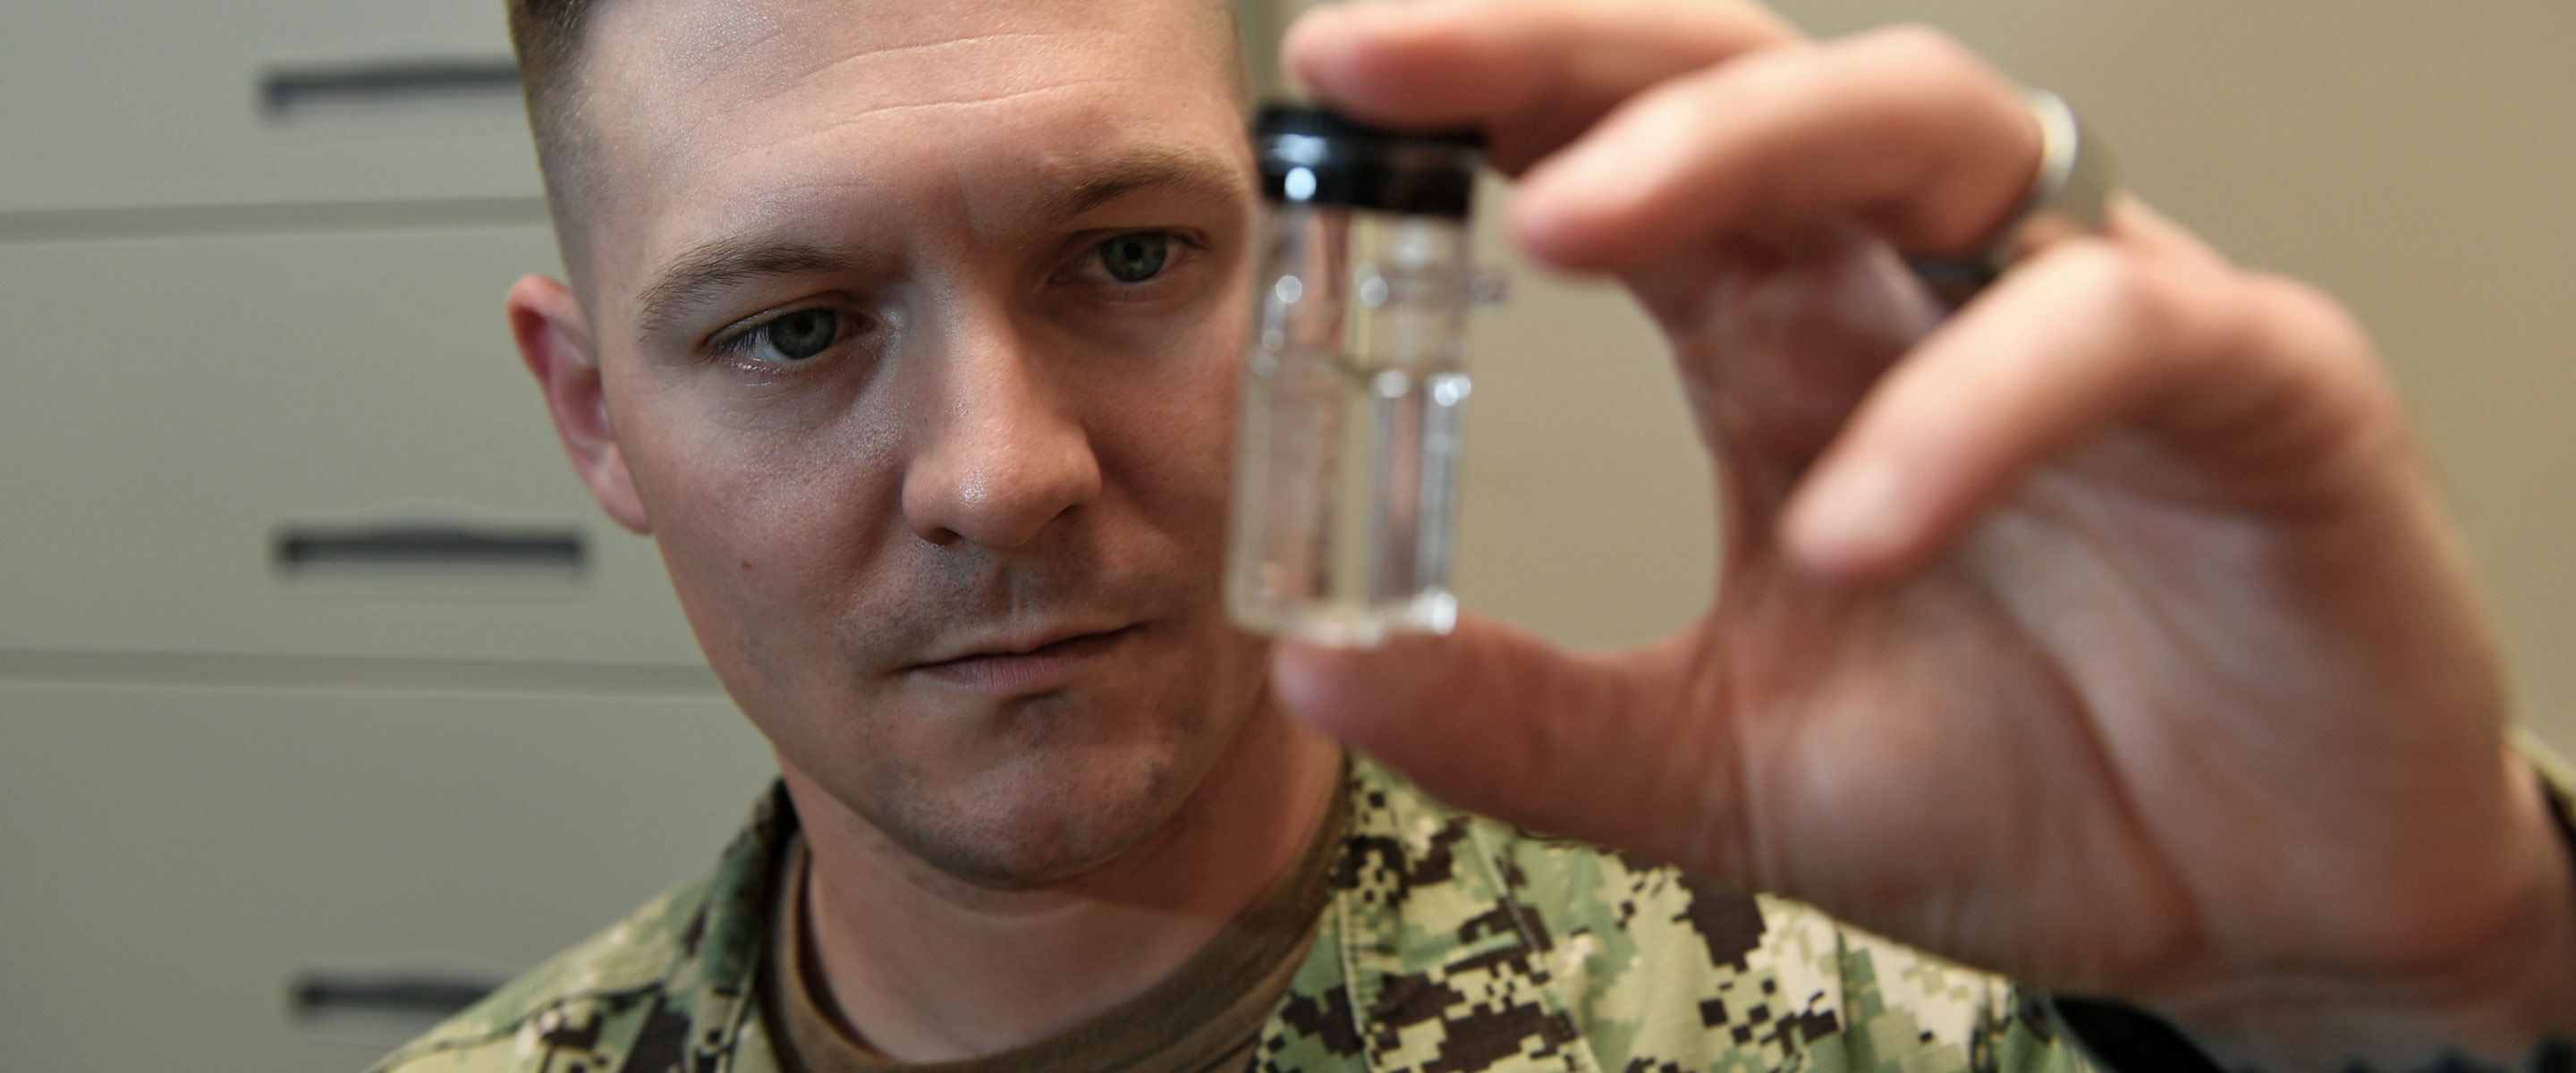 Navy Industrial Hygiene Officer examines a specimen in a glass bottle